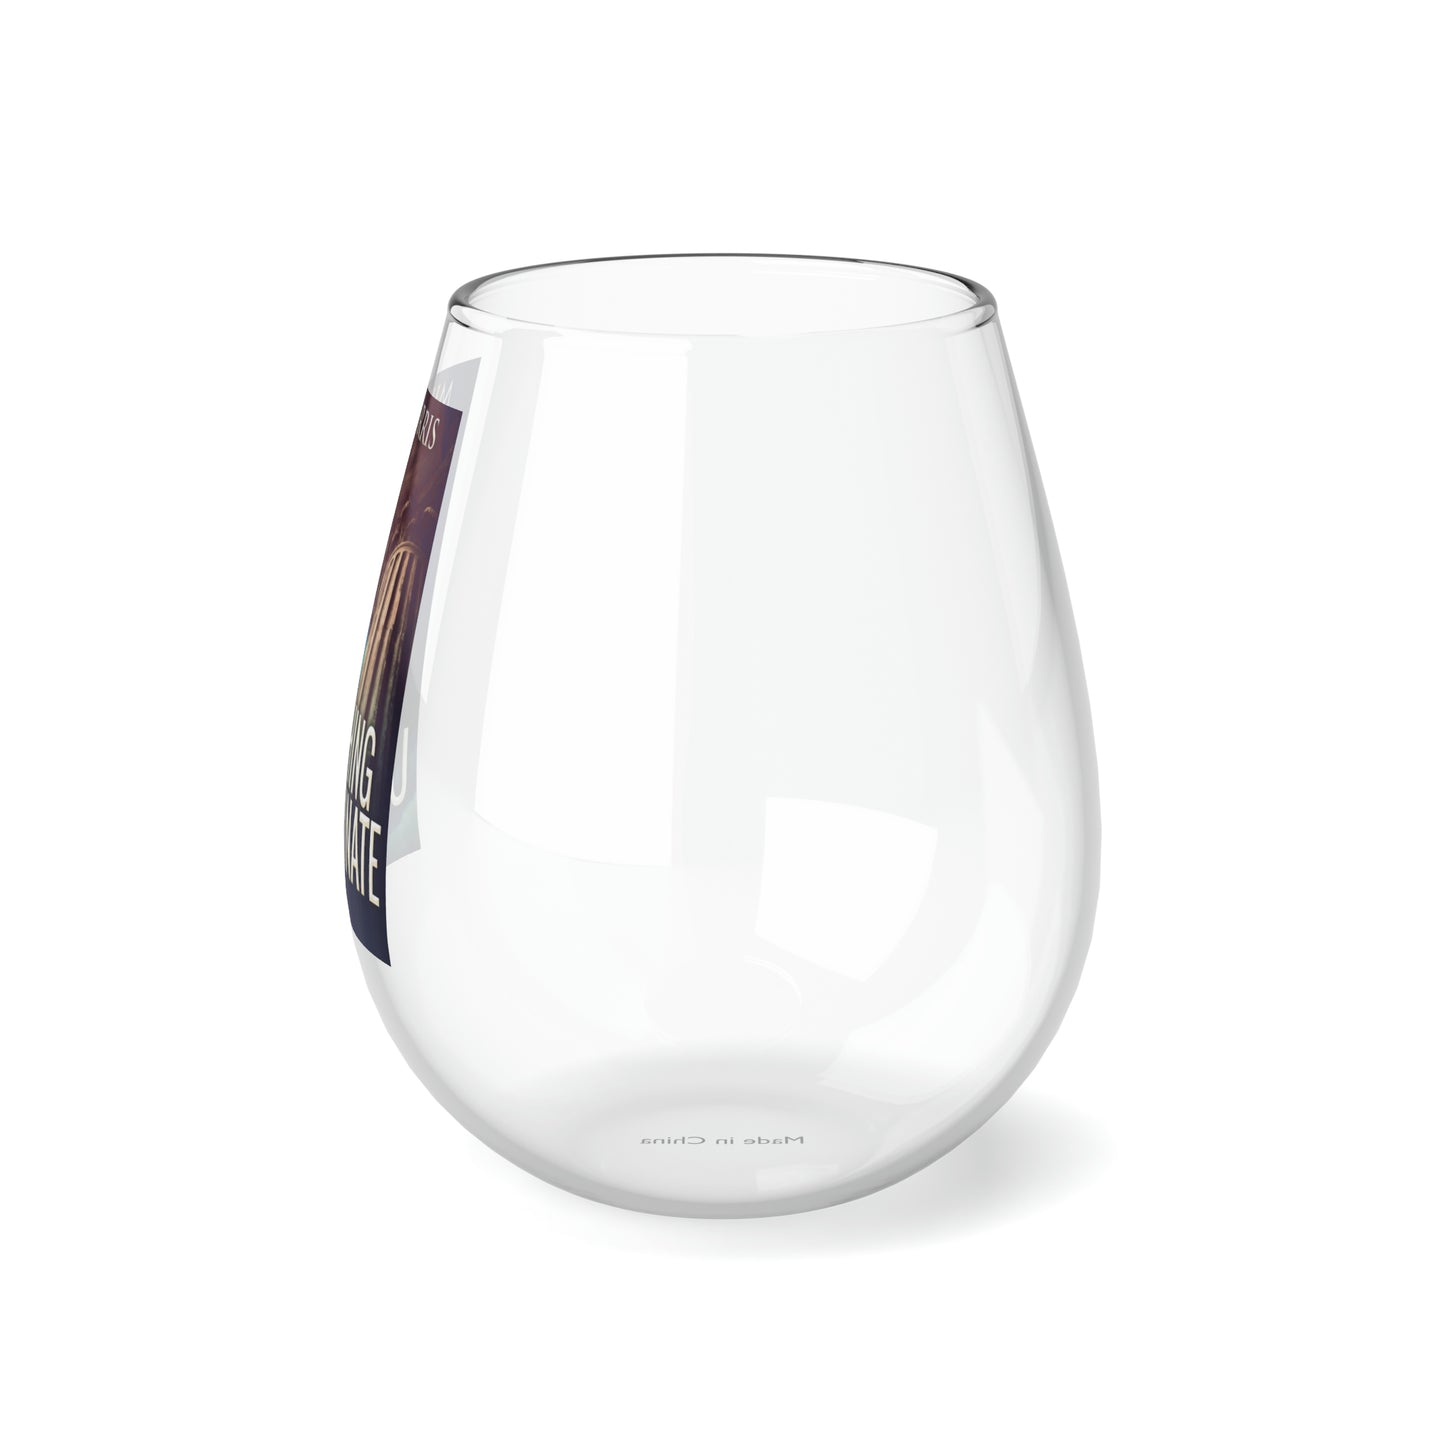 Something Unfortunate - Stemless Wine Glass, 11.75oz